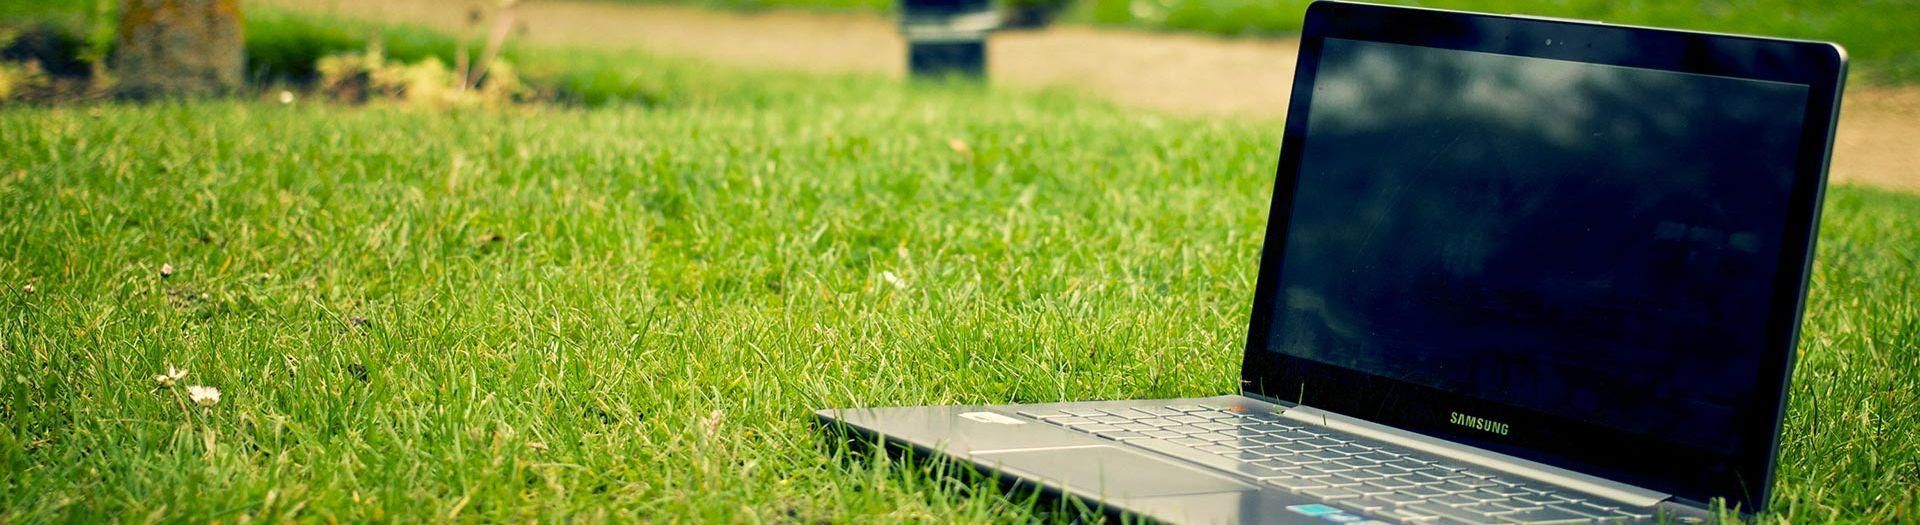 laptop-notebook-grass-meadow-1c6fa79c MijnVee  | BRIGHT Software B.V.